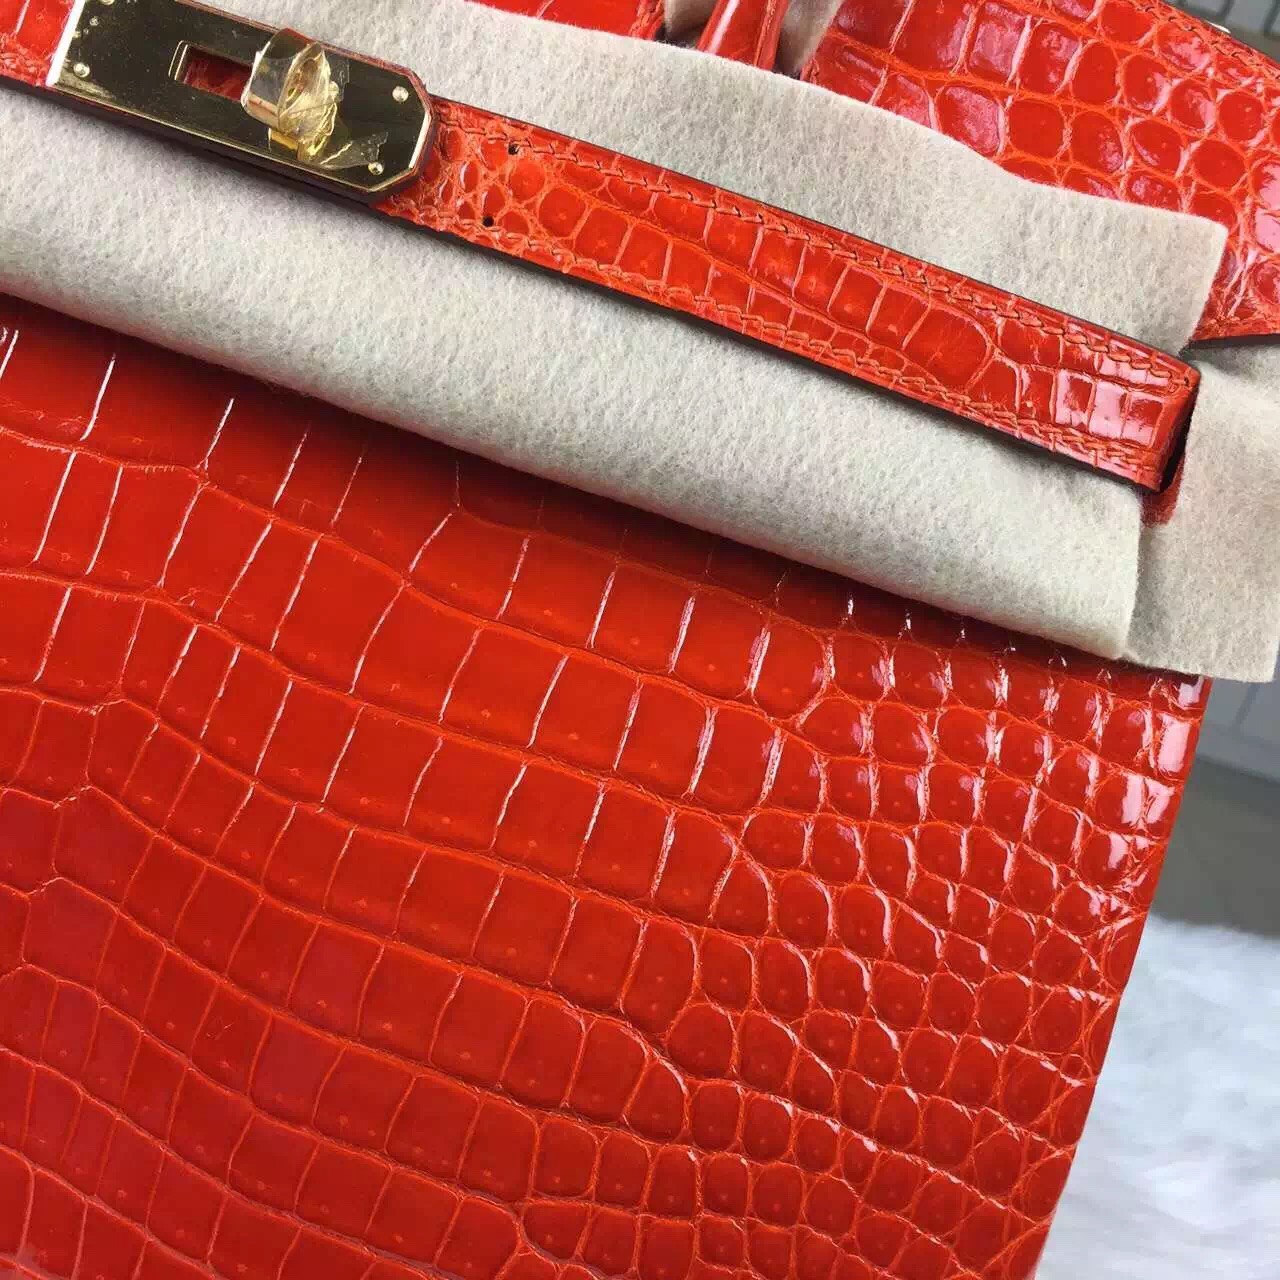 Hermes Custom-made Birkin 30CM Original Crocodile Shiny Leather Tote Bag in Orange